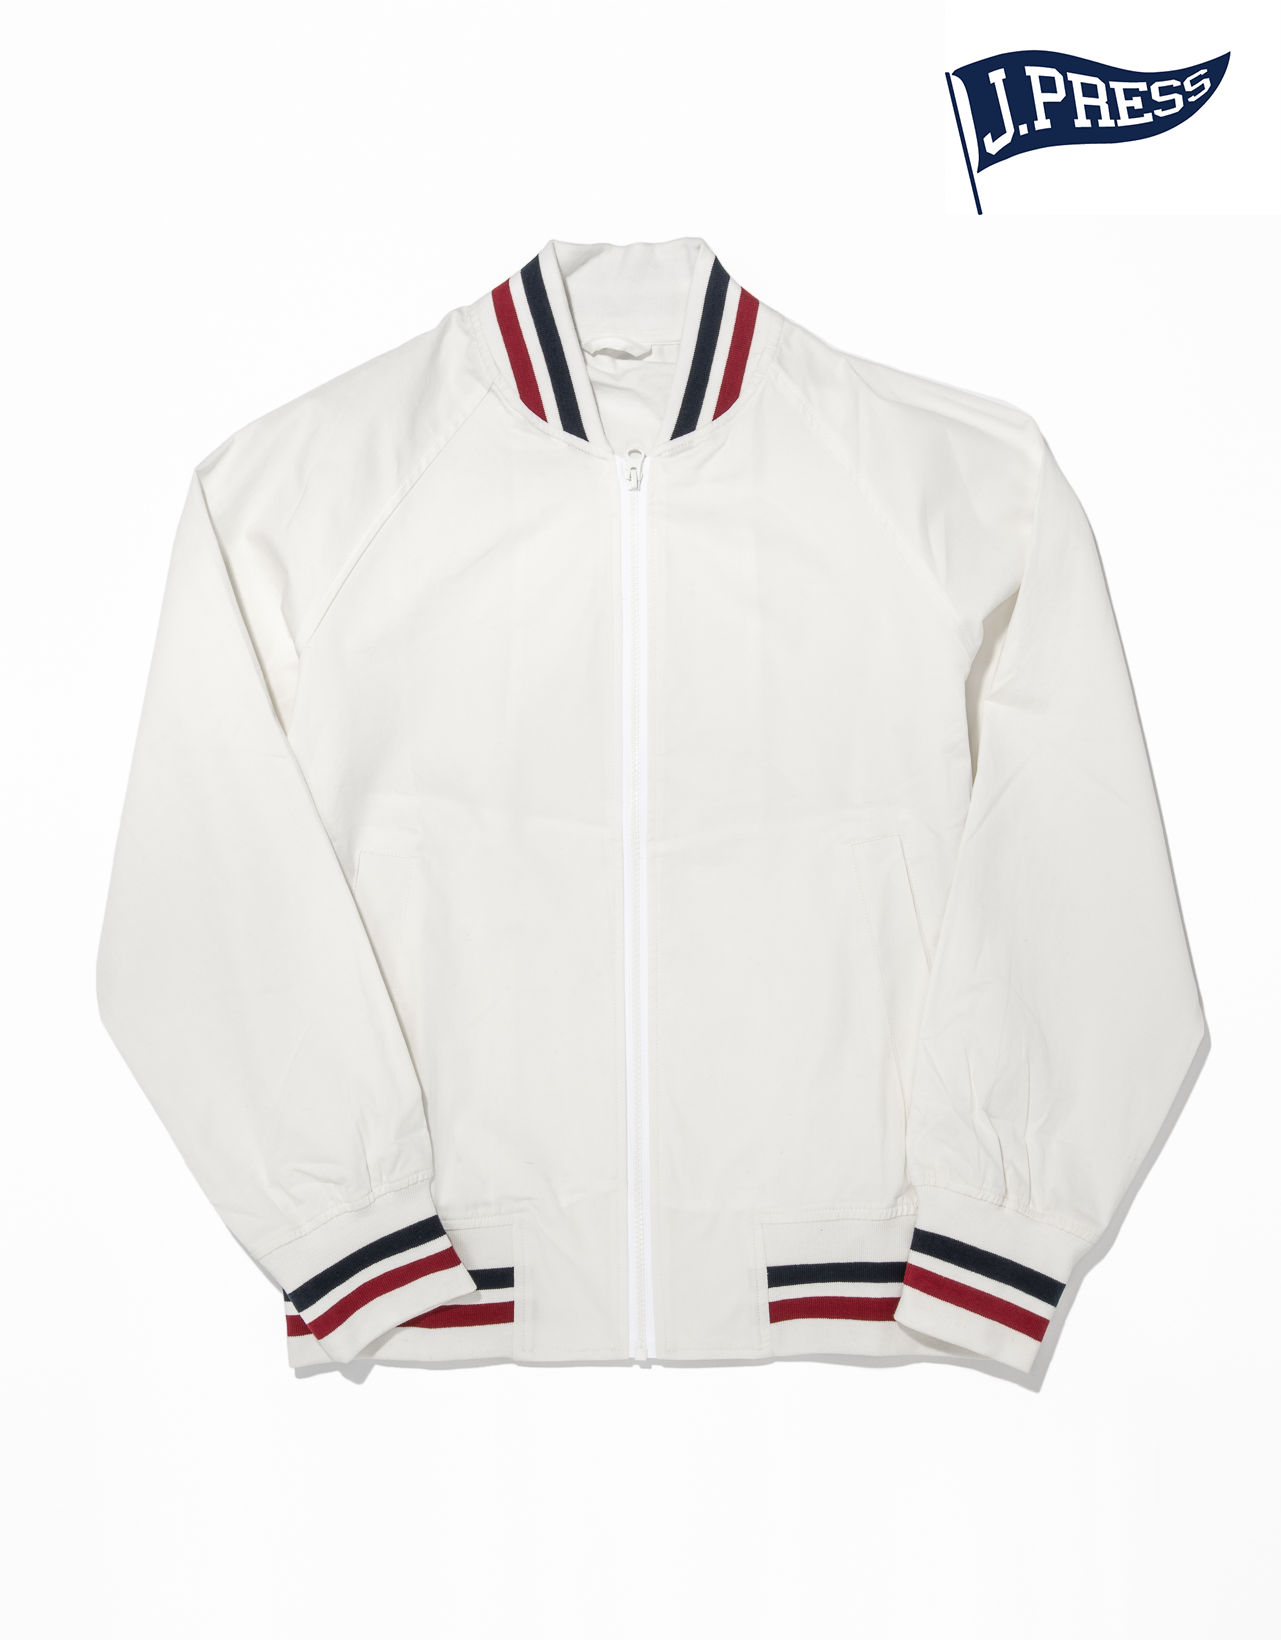 Classic Tennis Jacket - White | Pennant Label - J. Press – J. PRESS